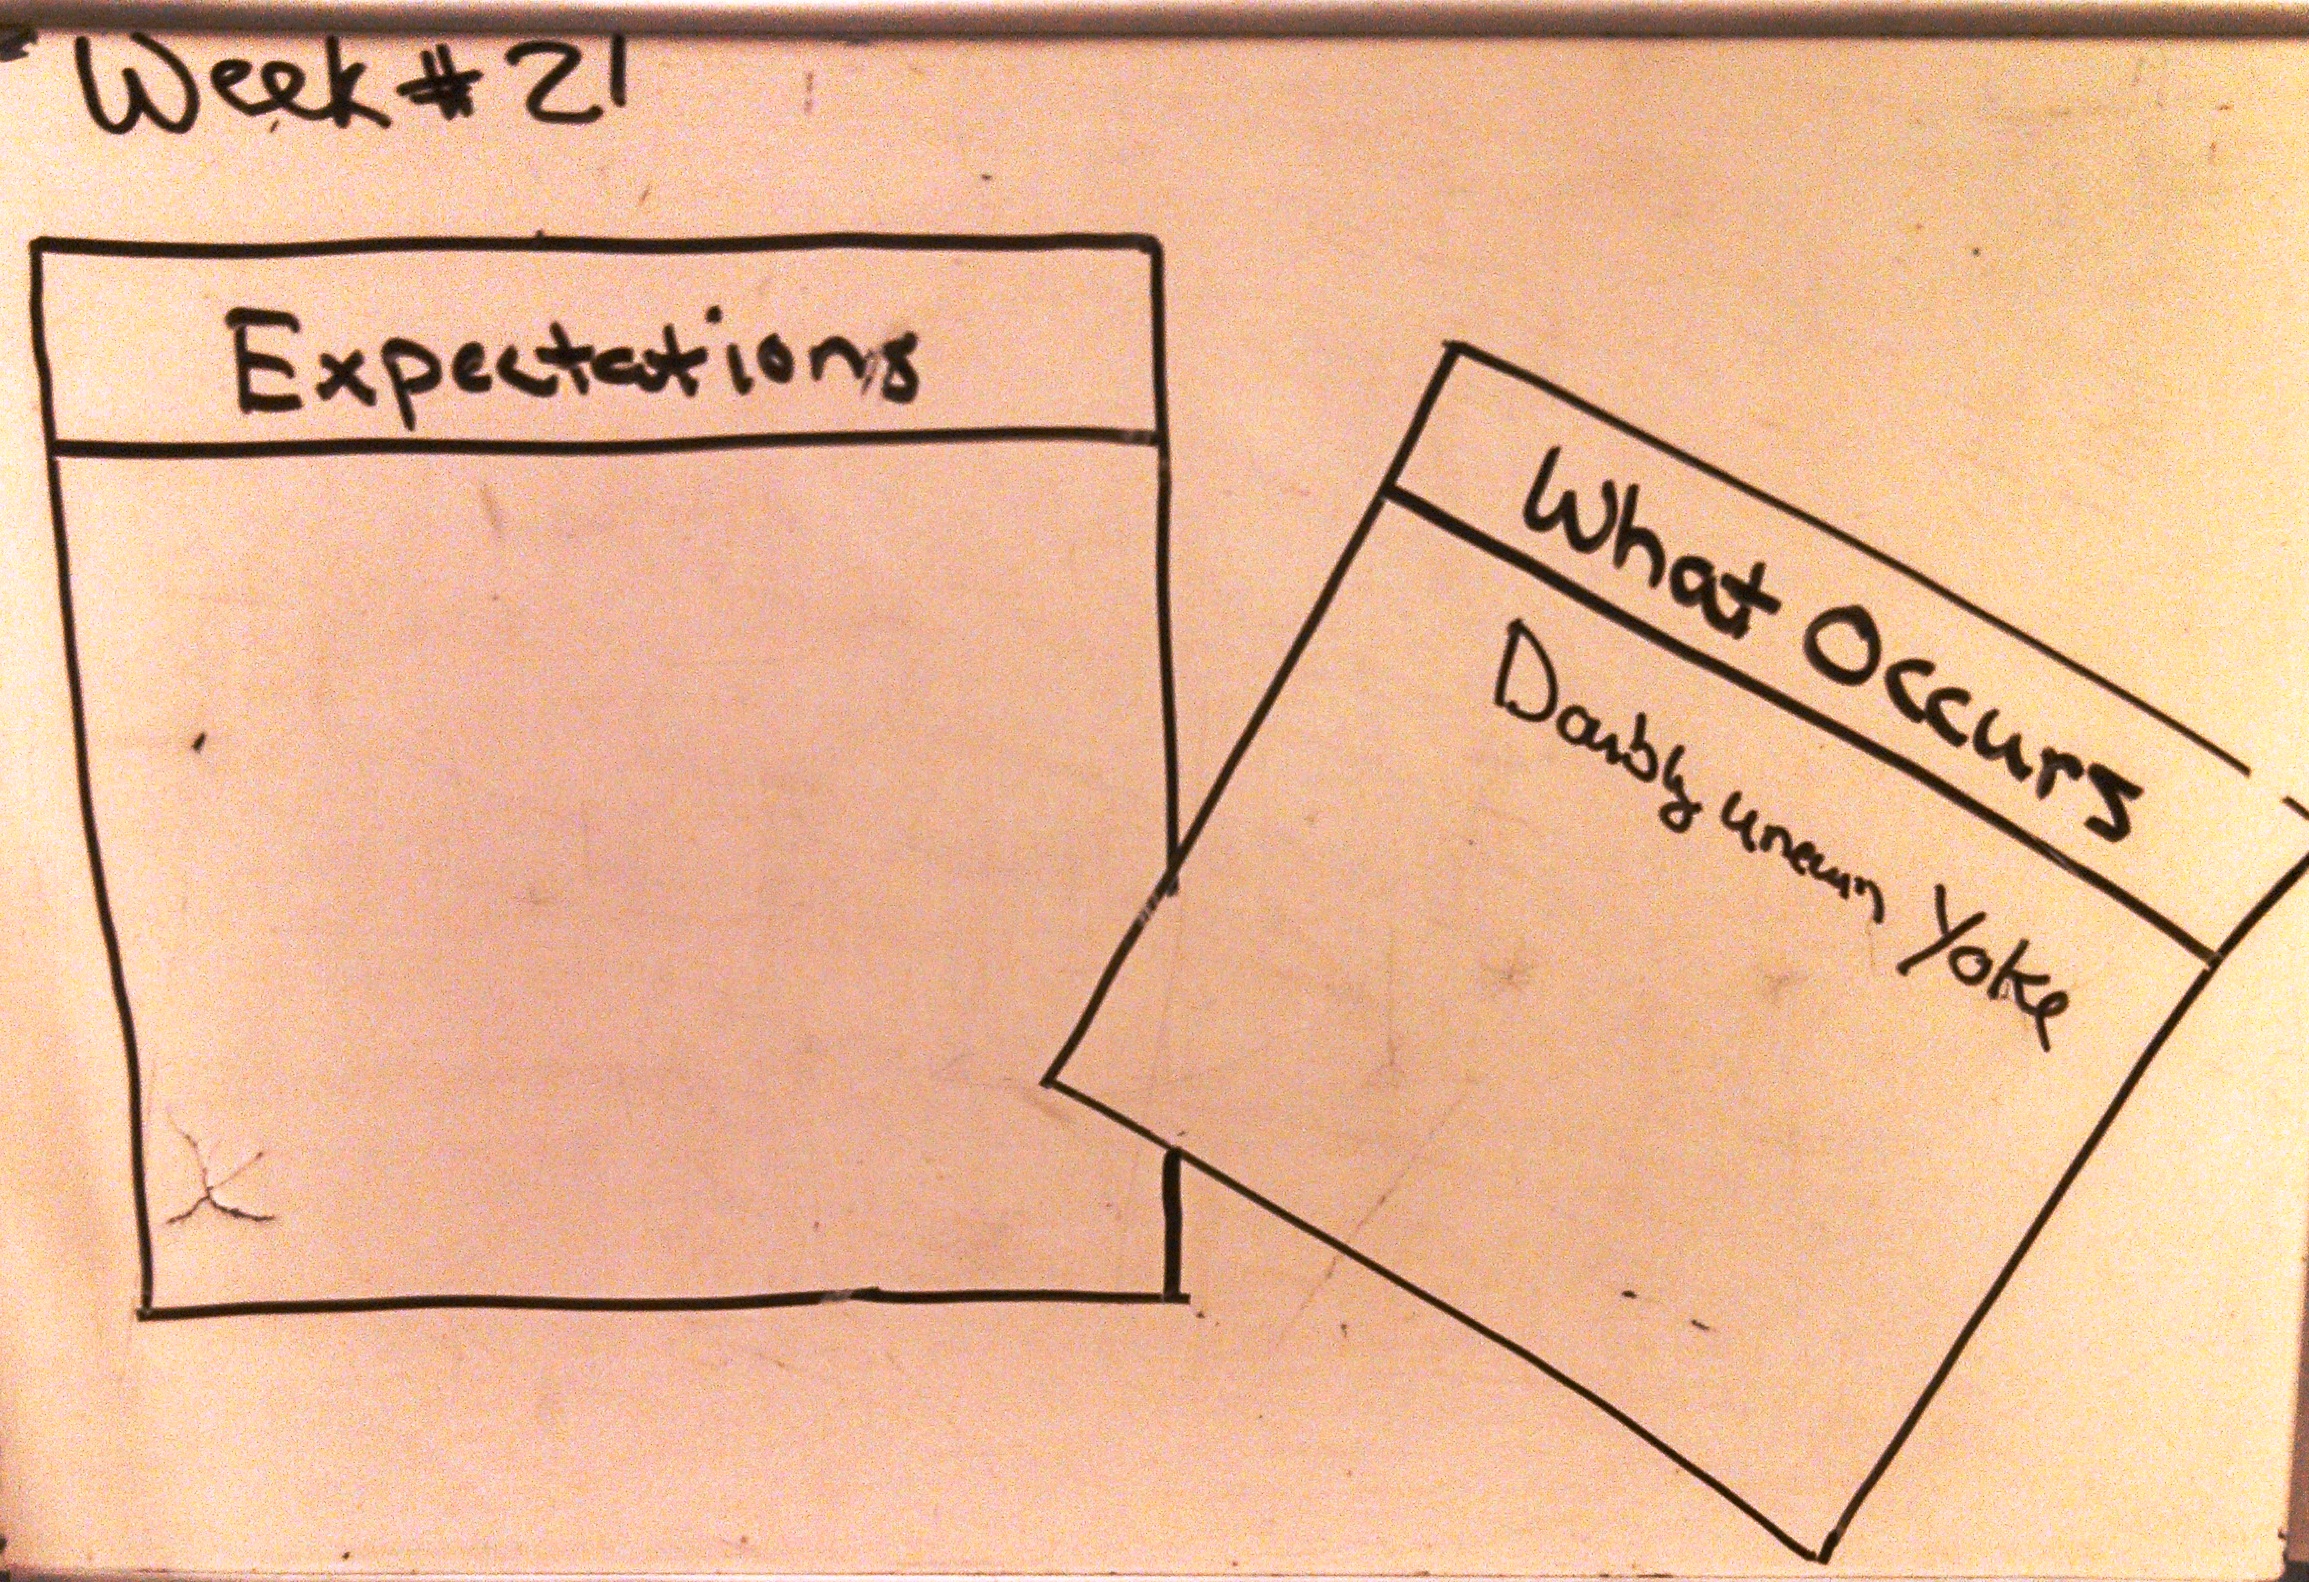 week-21-whiteboard-2.jpg